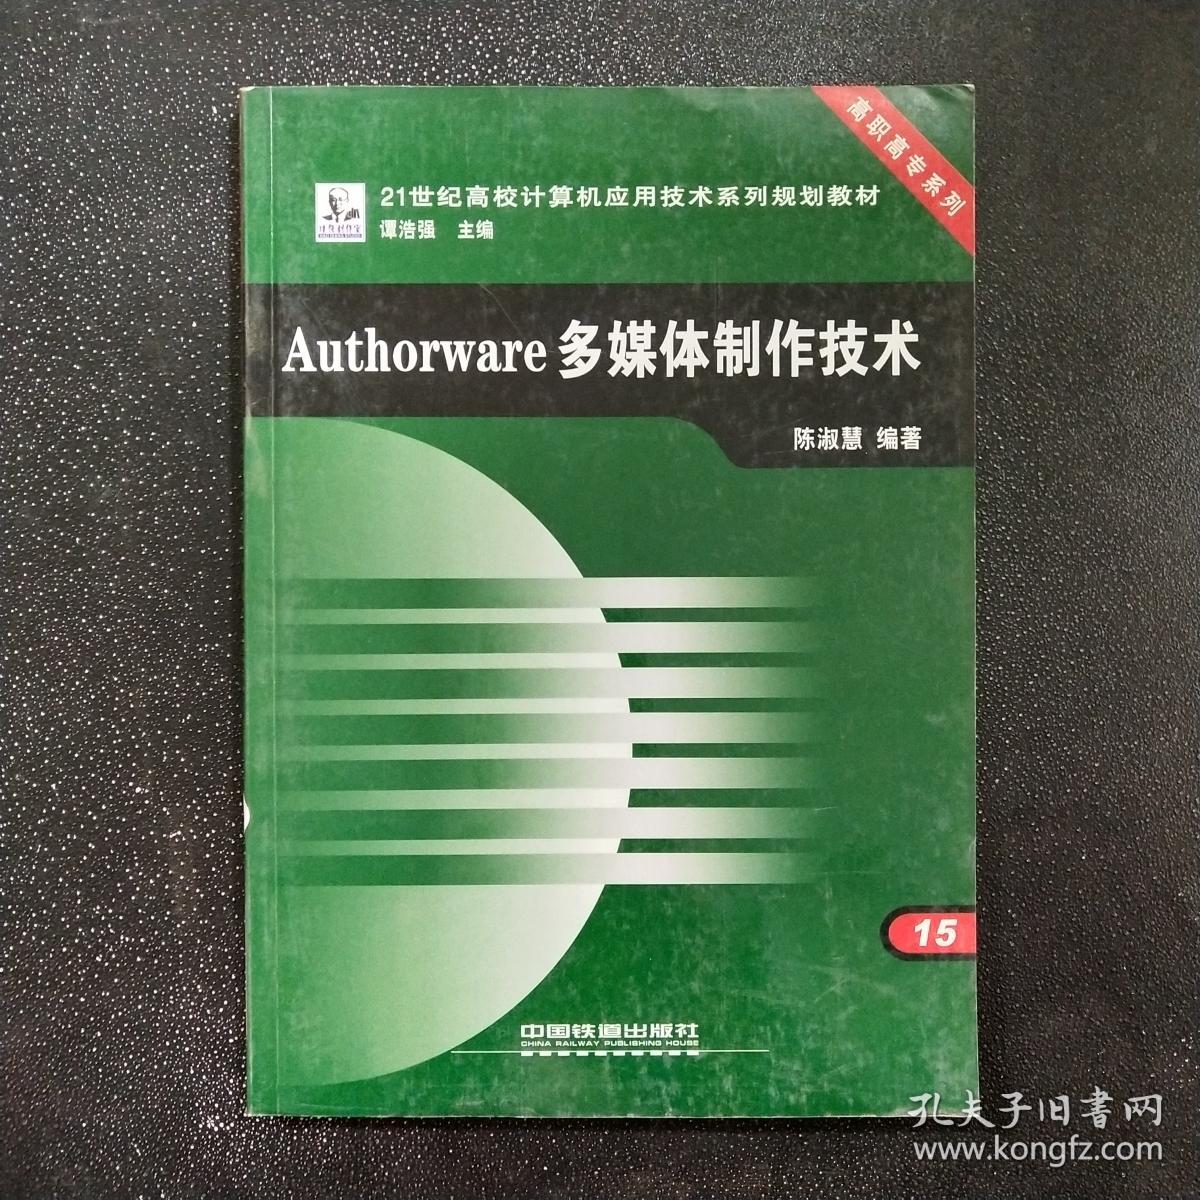 Authorware多媒体制作技术——21世纪高校计算机应用技术系列规划教材